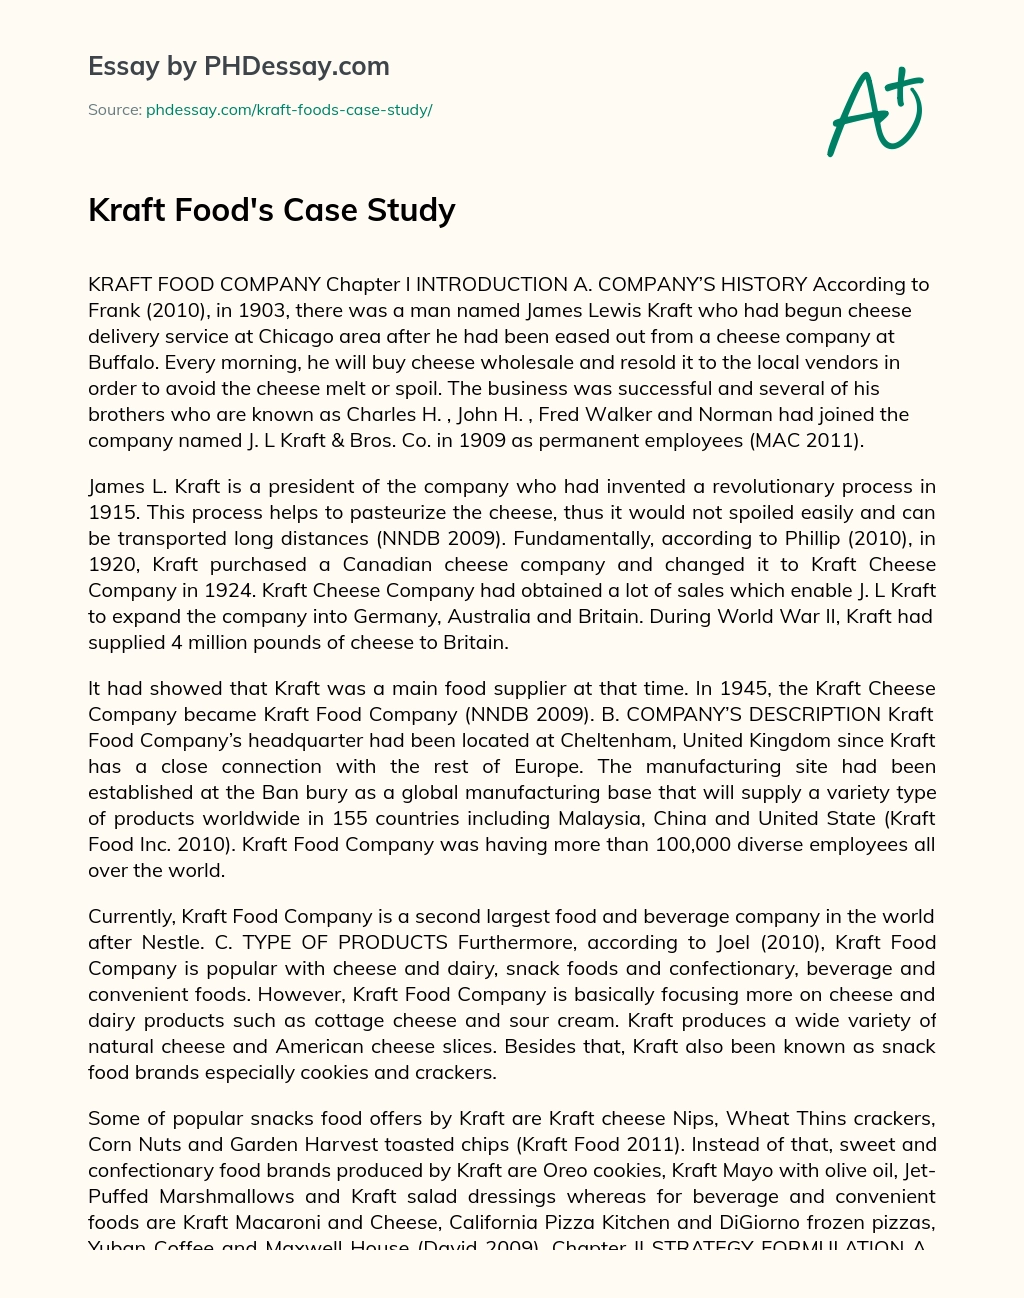 Kraft Food’s Case Study essay